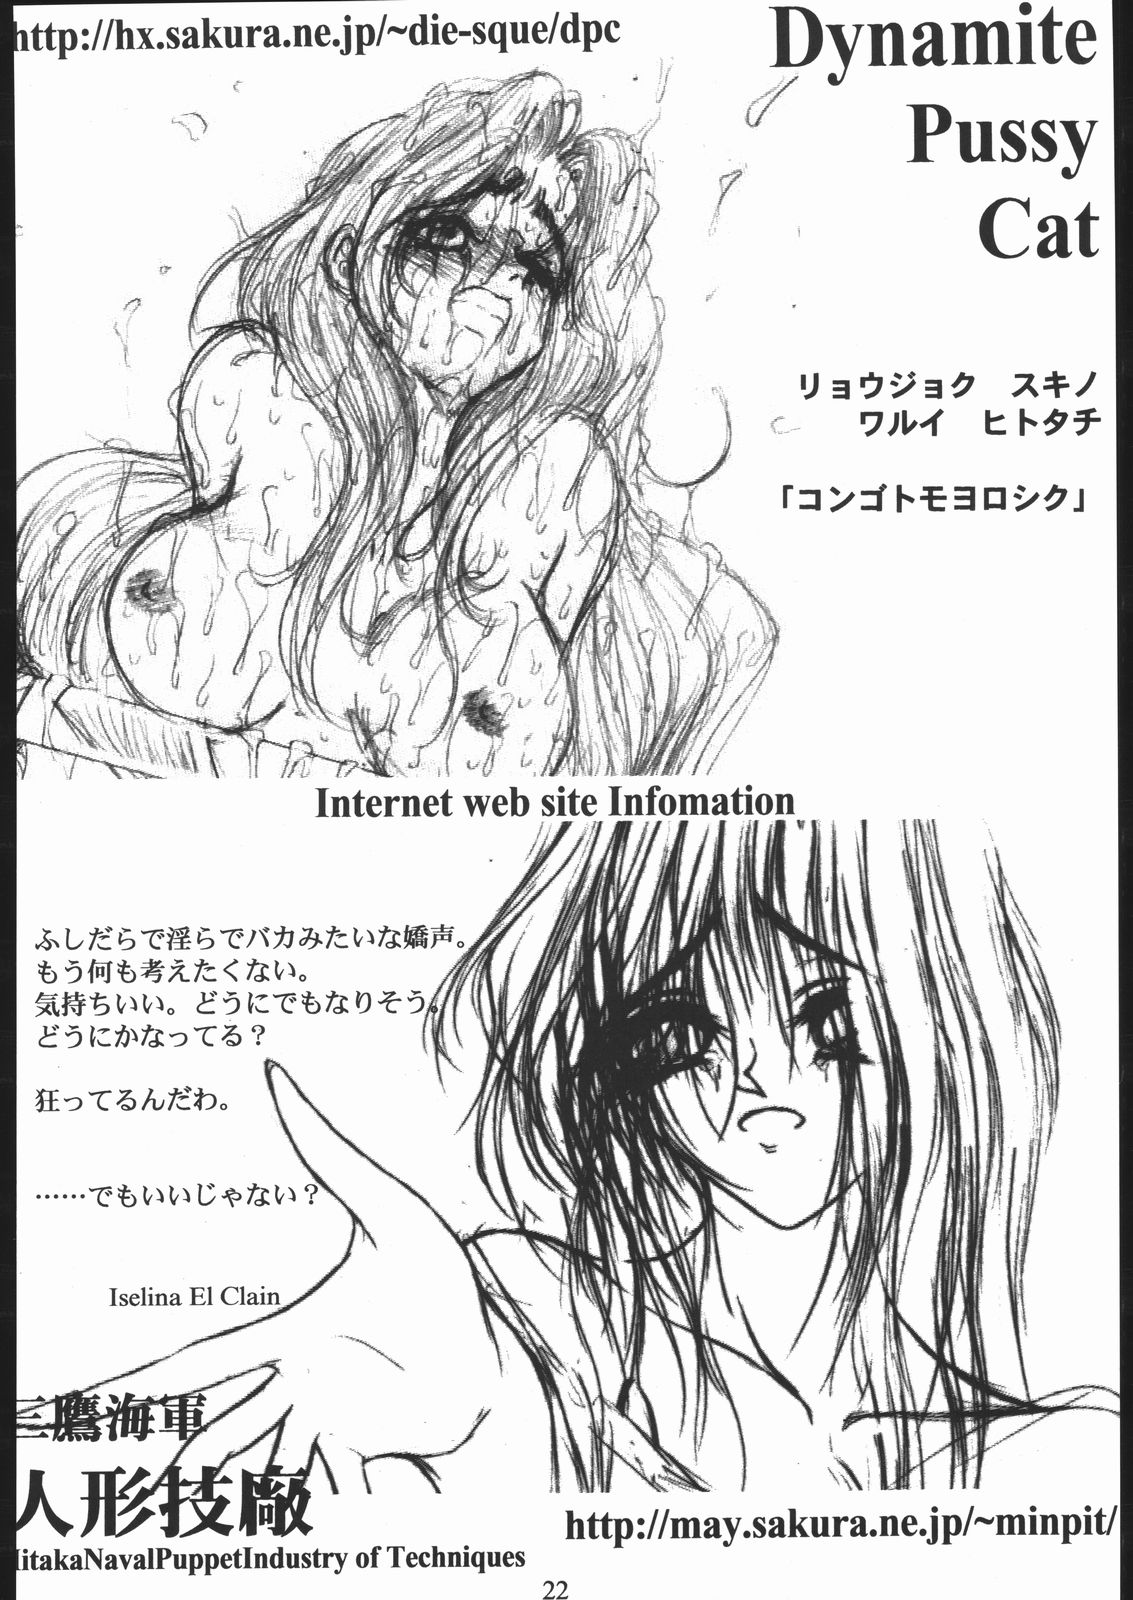 [Love Hina] Nabu Hina (Ikebukuro DPC/Dynamite PussyCat) page 21 full